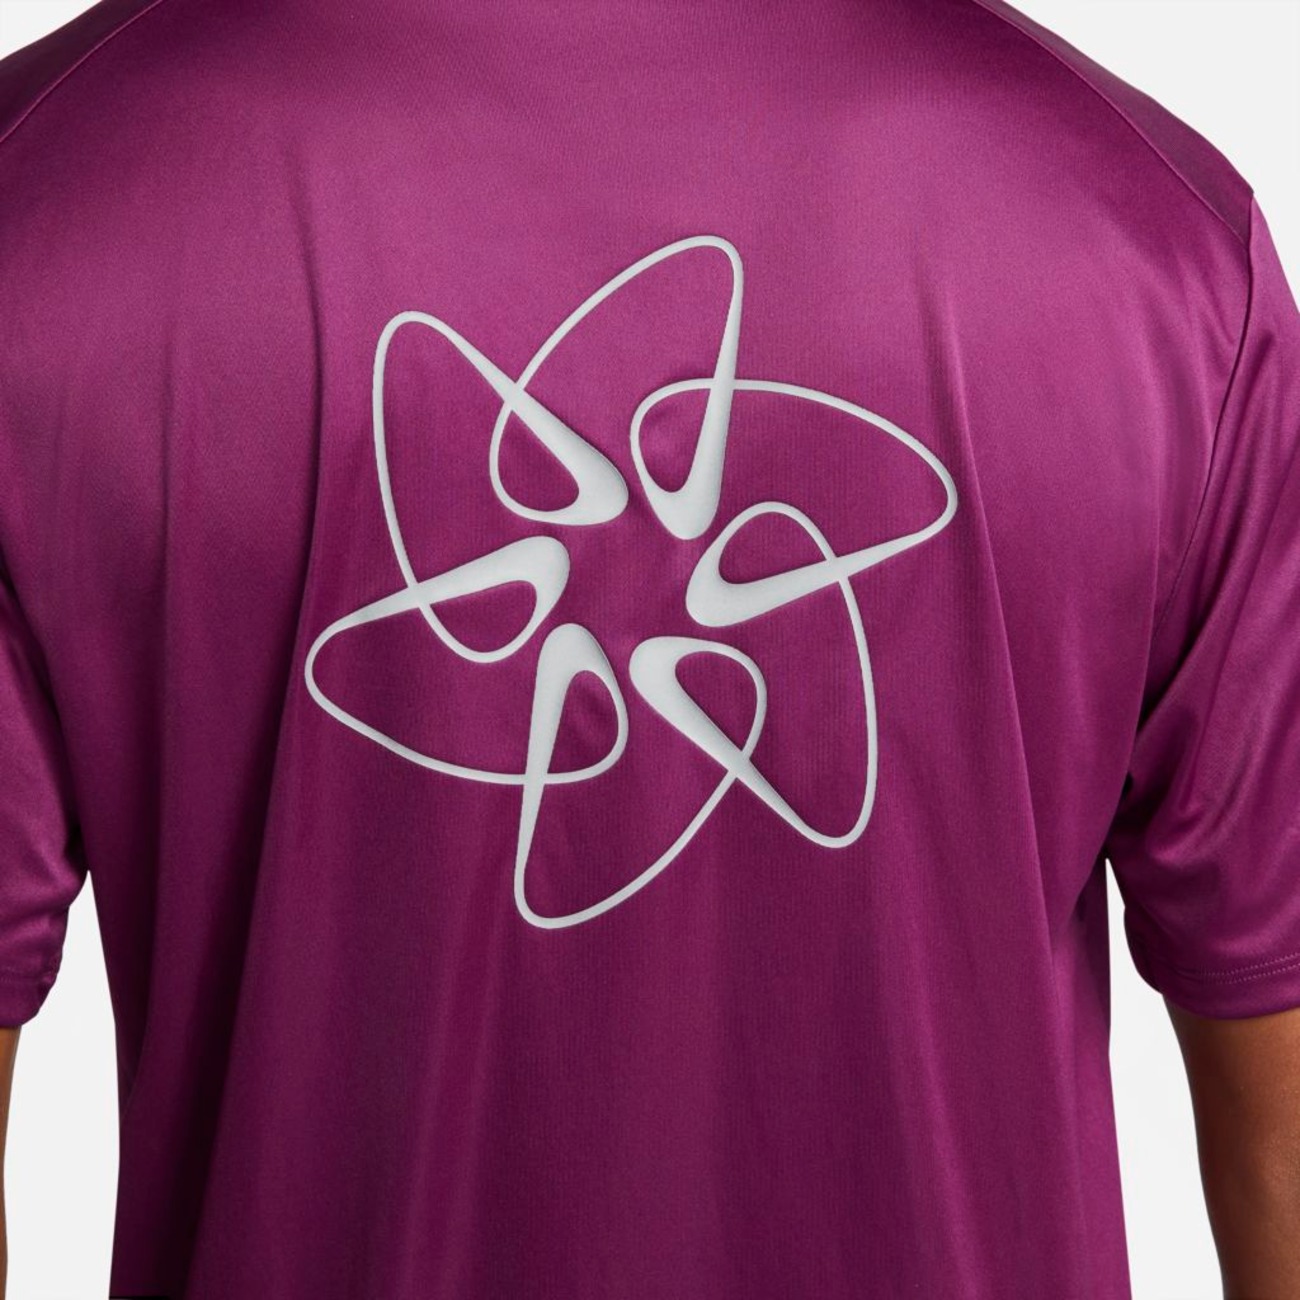 Camiseta Nike Dri-FIT UV Run Division Miler Masculina - Foto 6